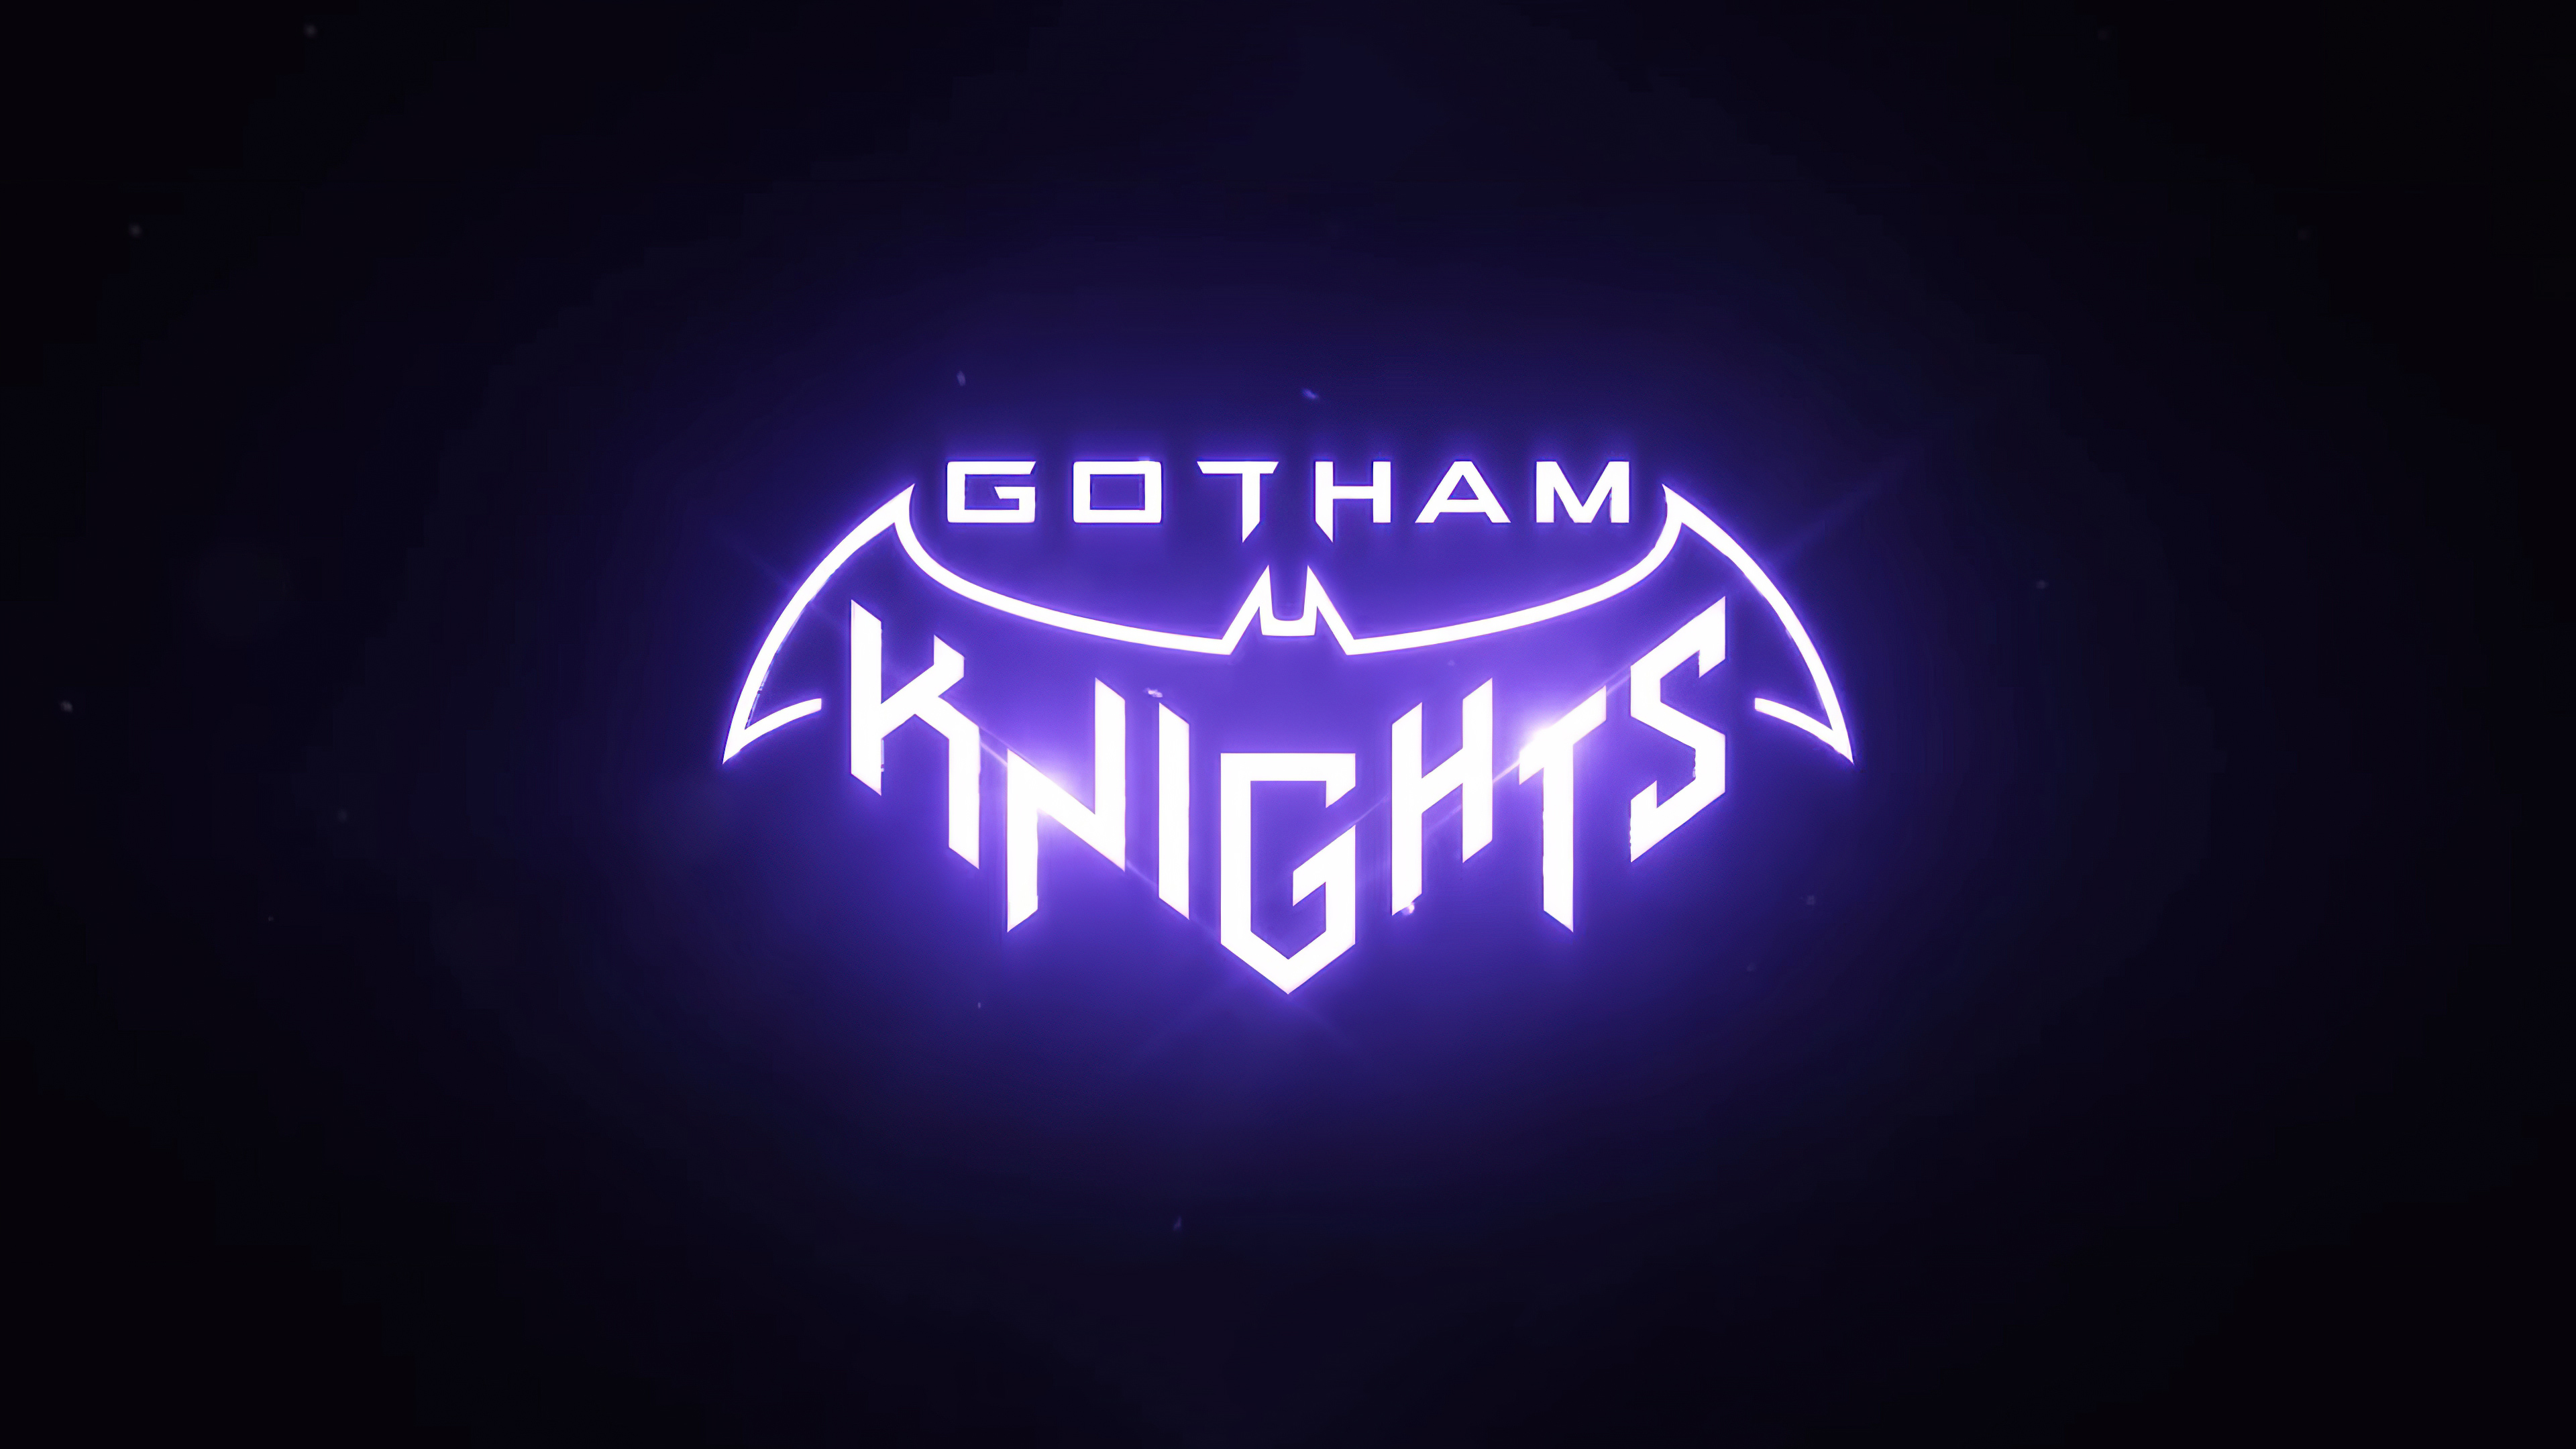 gotham knights cw download